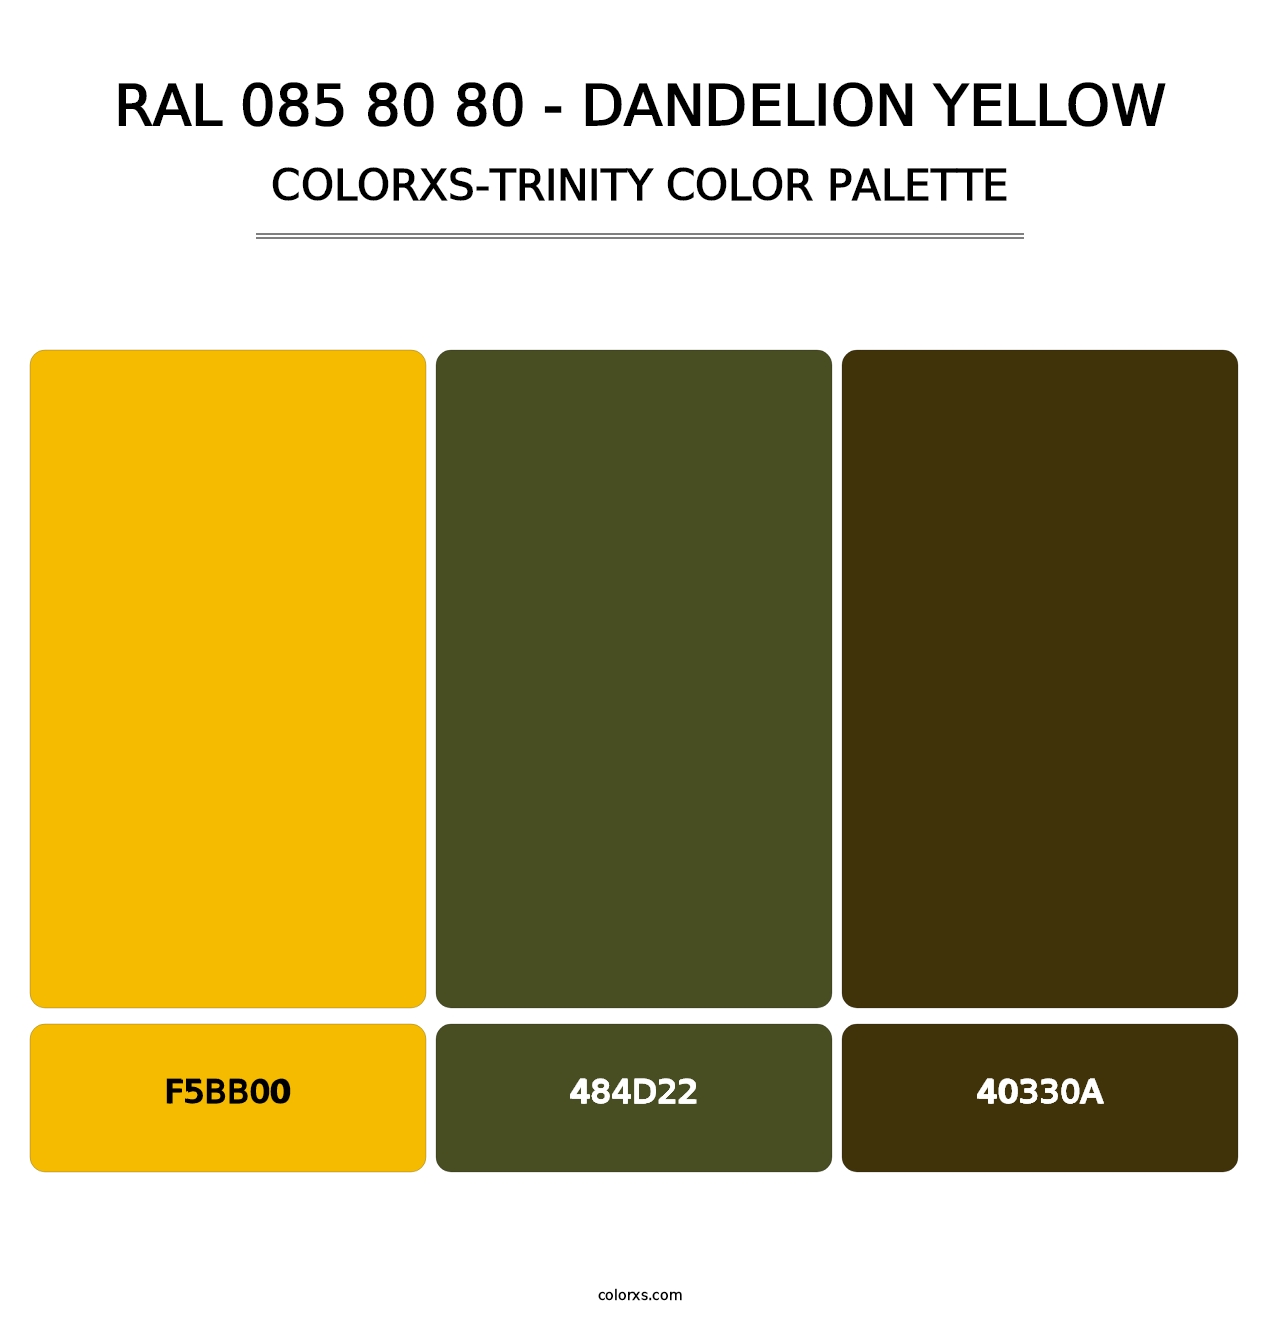 RAL 085 80 80 - Dandelion Yellow - Colorxs Trinity Palette